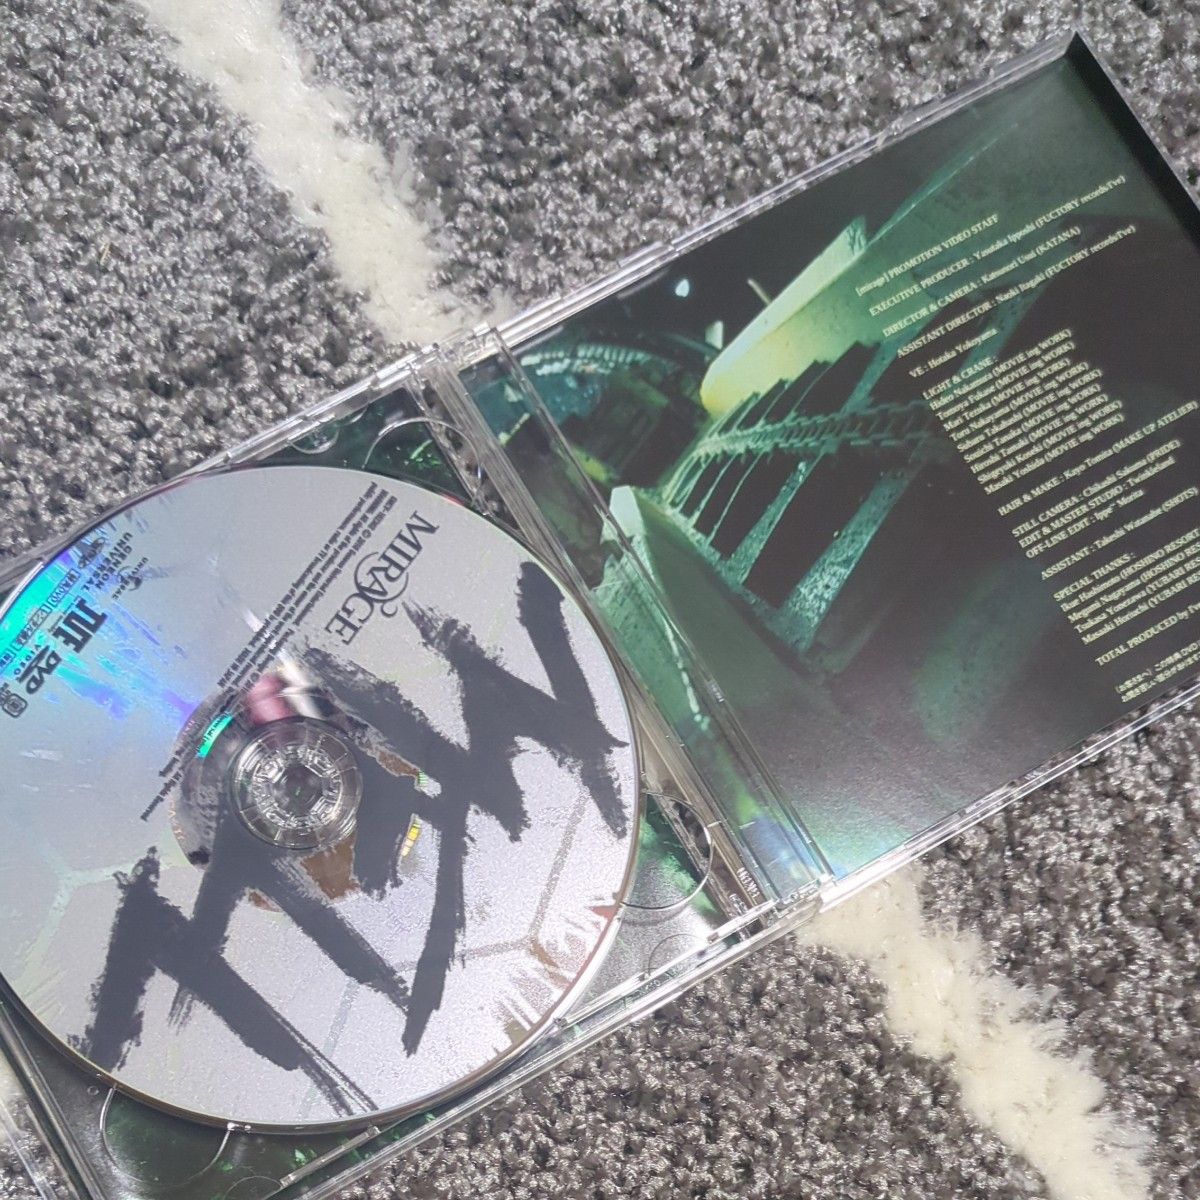 MELL/MIRAGE〈初回限定盤〉CD＋DVD　I've　アイブ　アイヴ